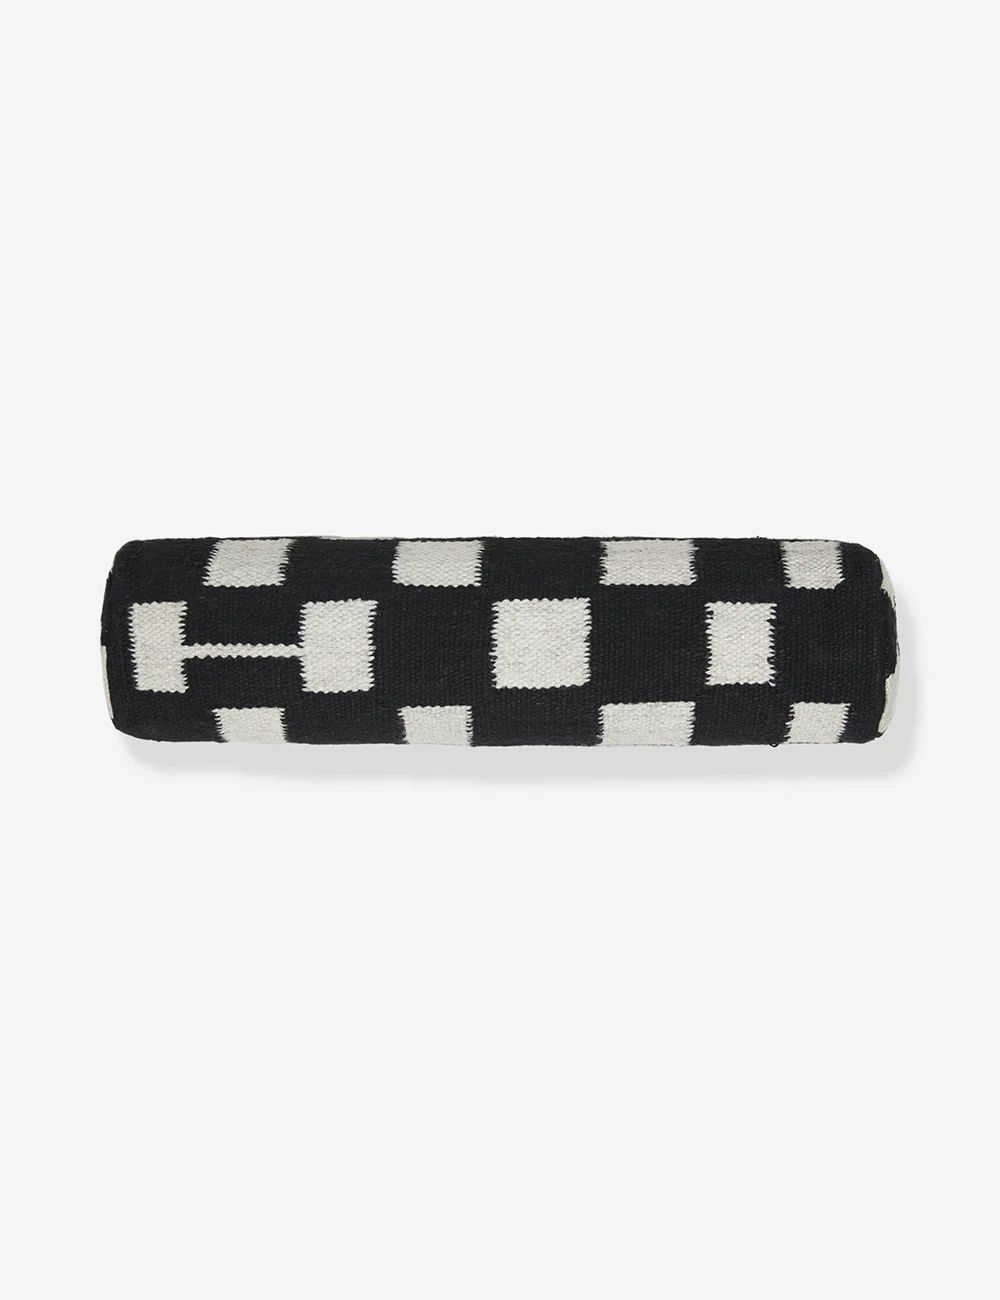 Irregular Checkerboard Bolster Pillow by Sarah Sherman Samuel | Lulu and Georgia 